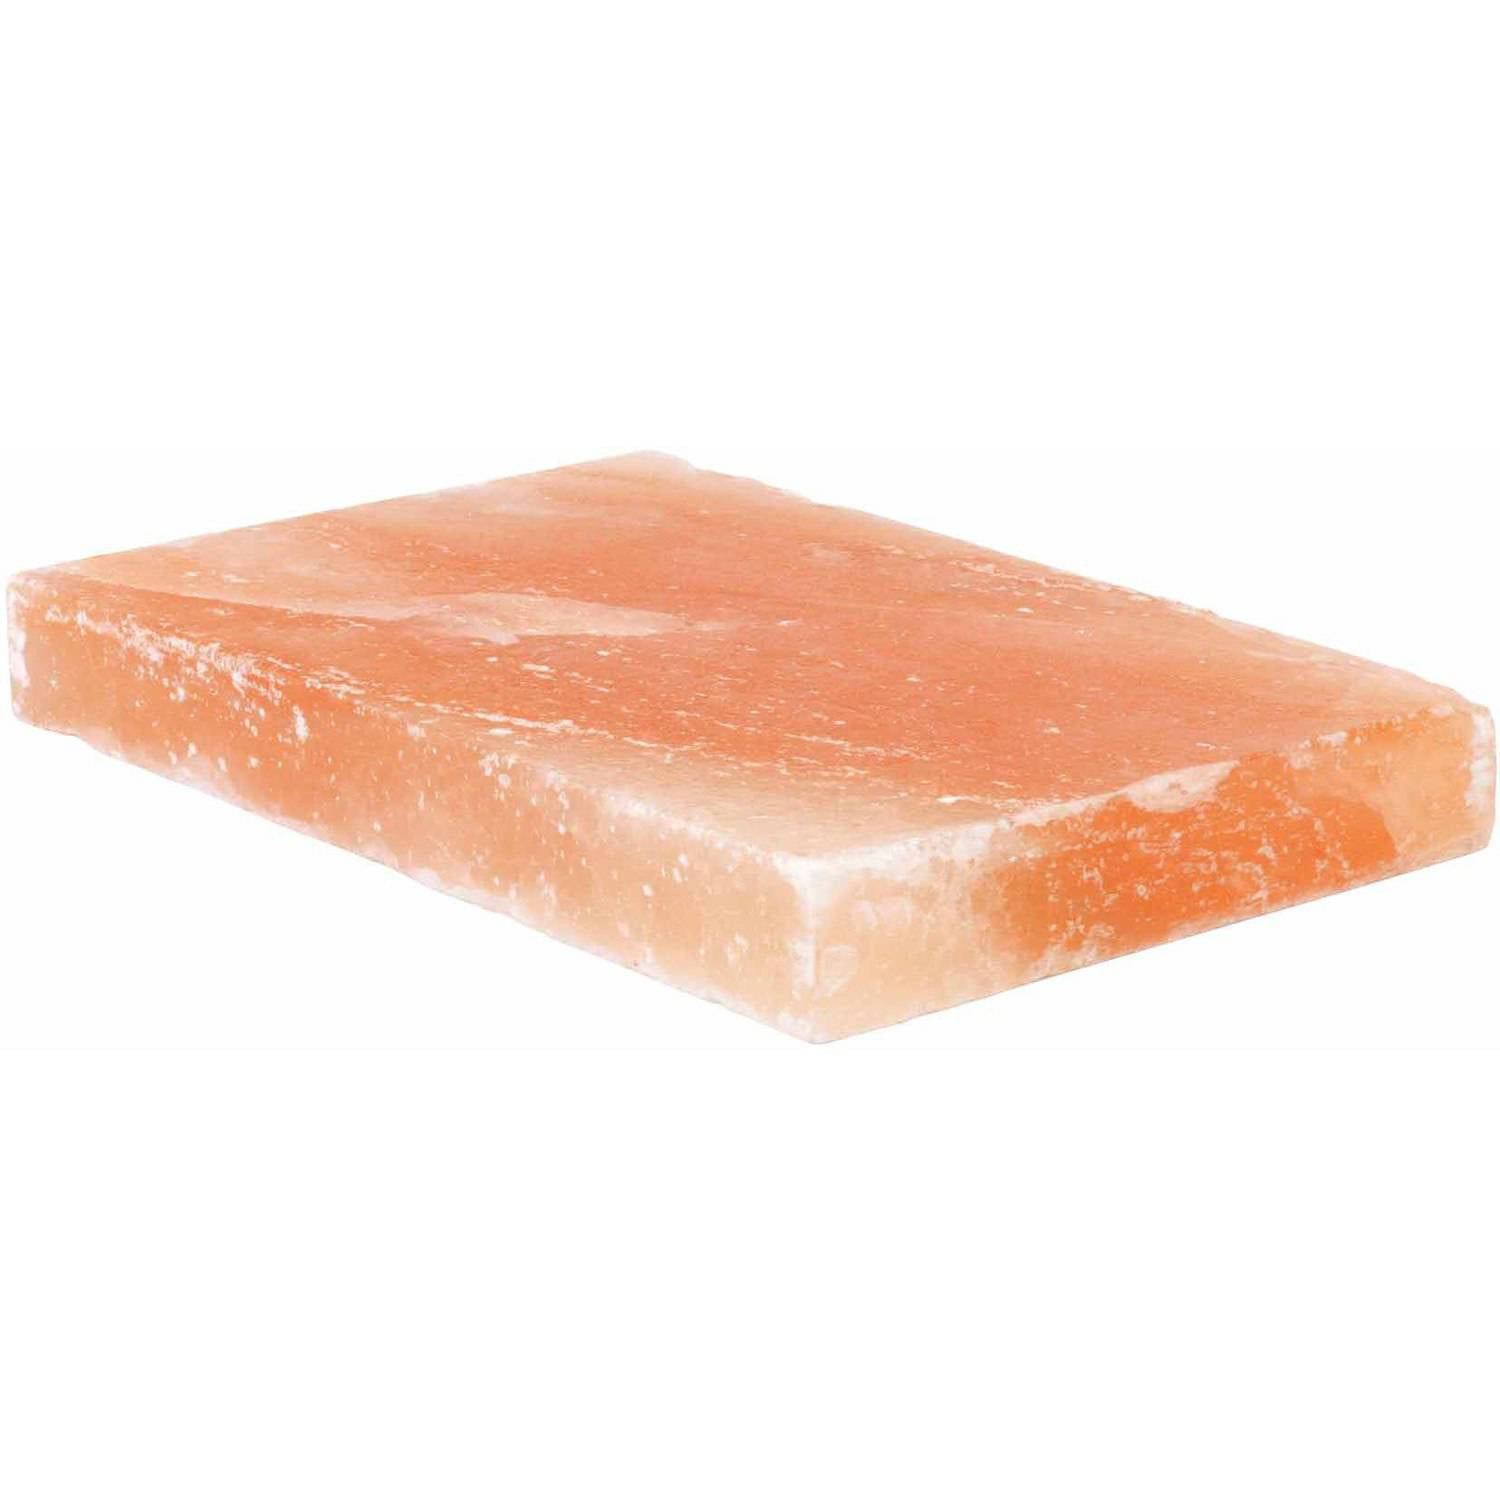 4 X 4 X 2 Organic Pink Himalayan Salt Bricks Block Slab Multi Use Purpose